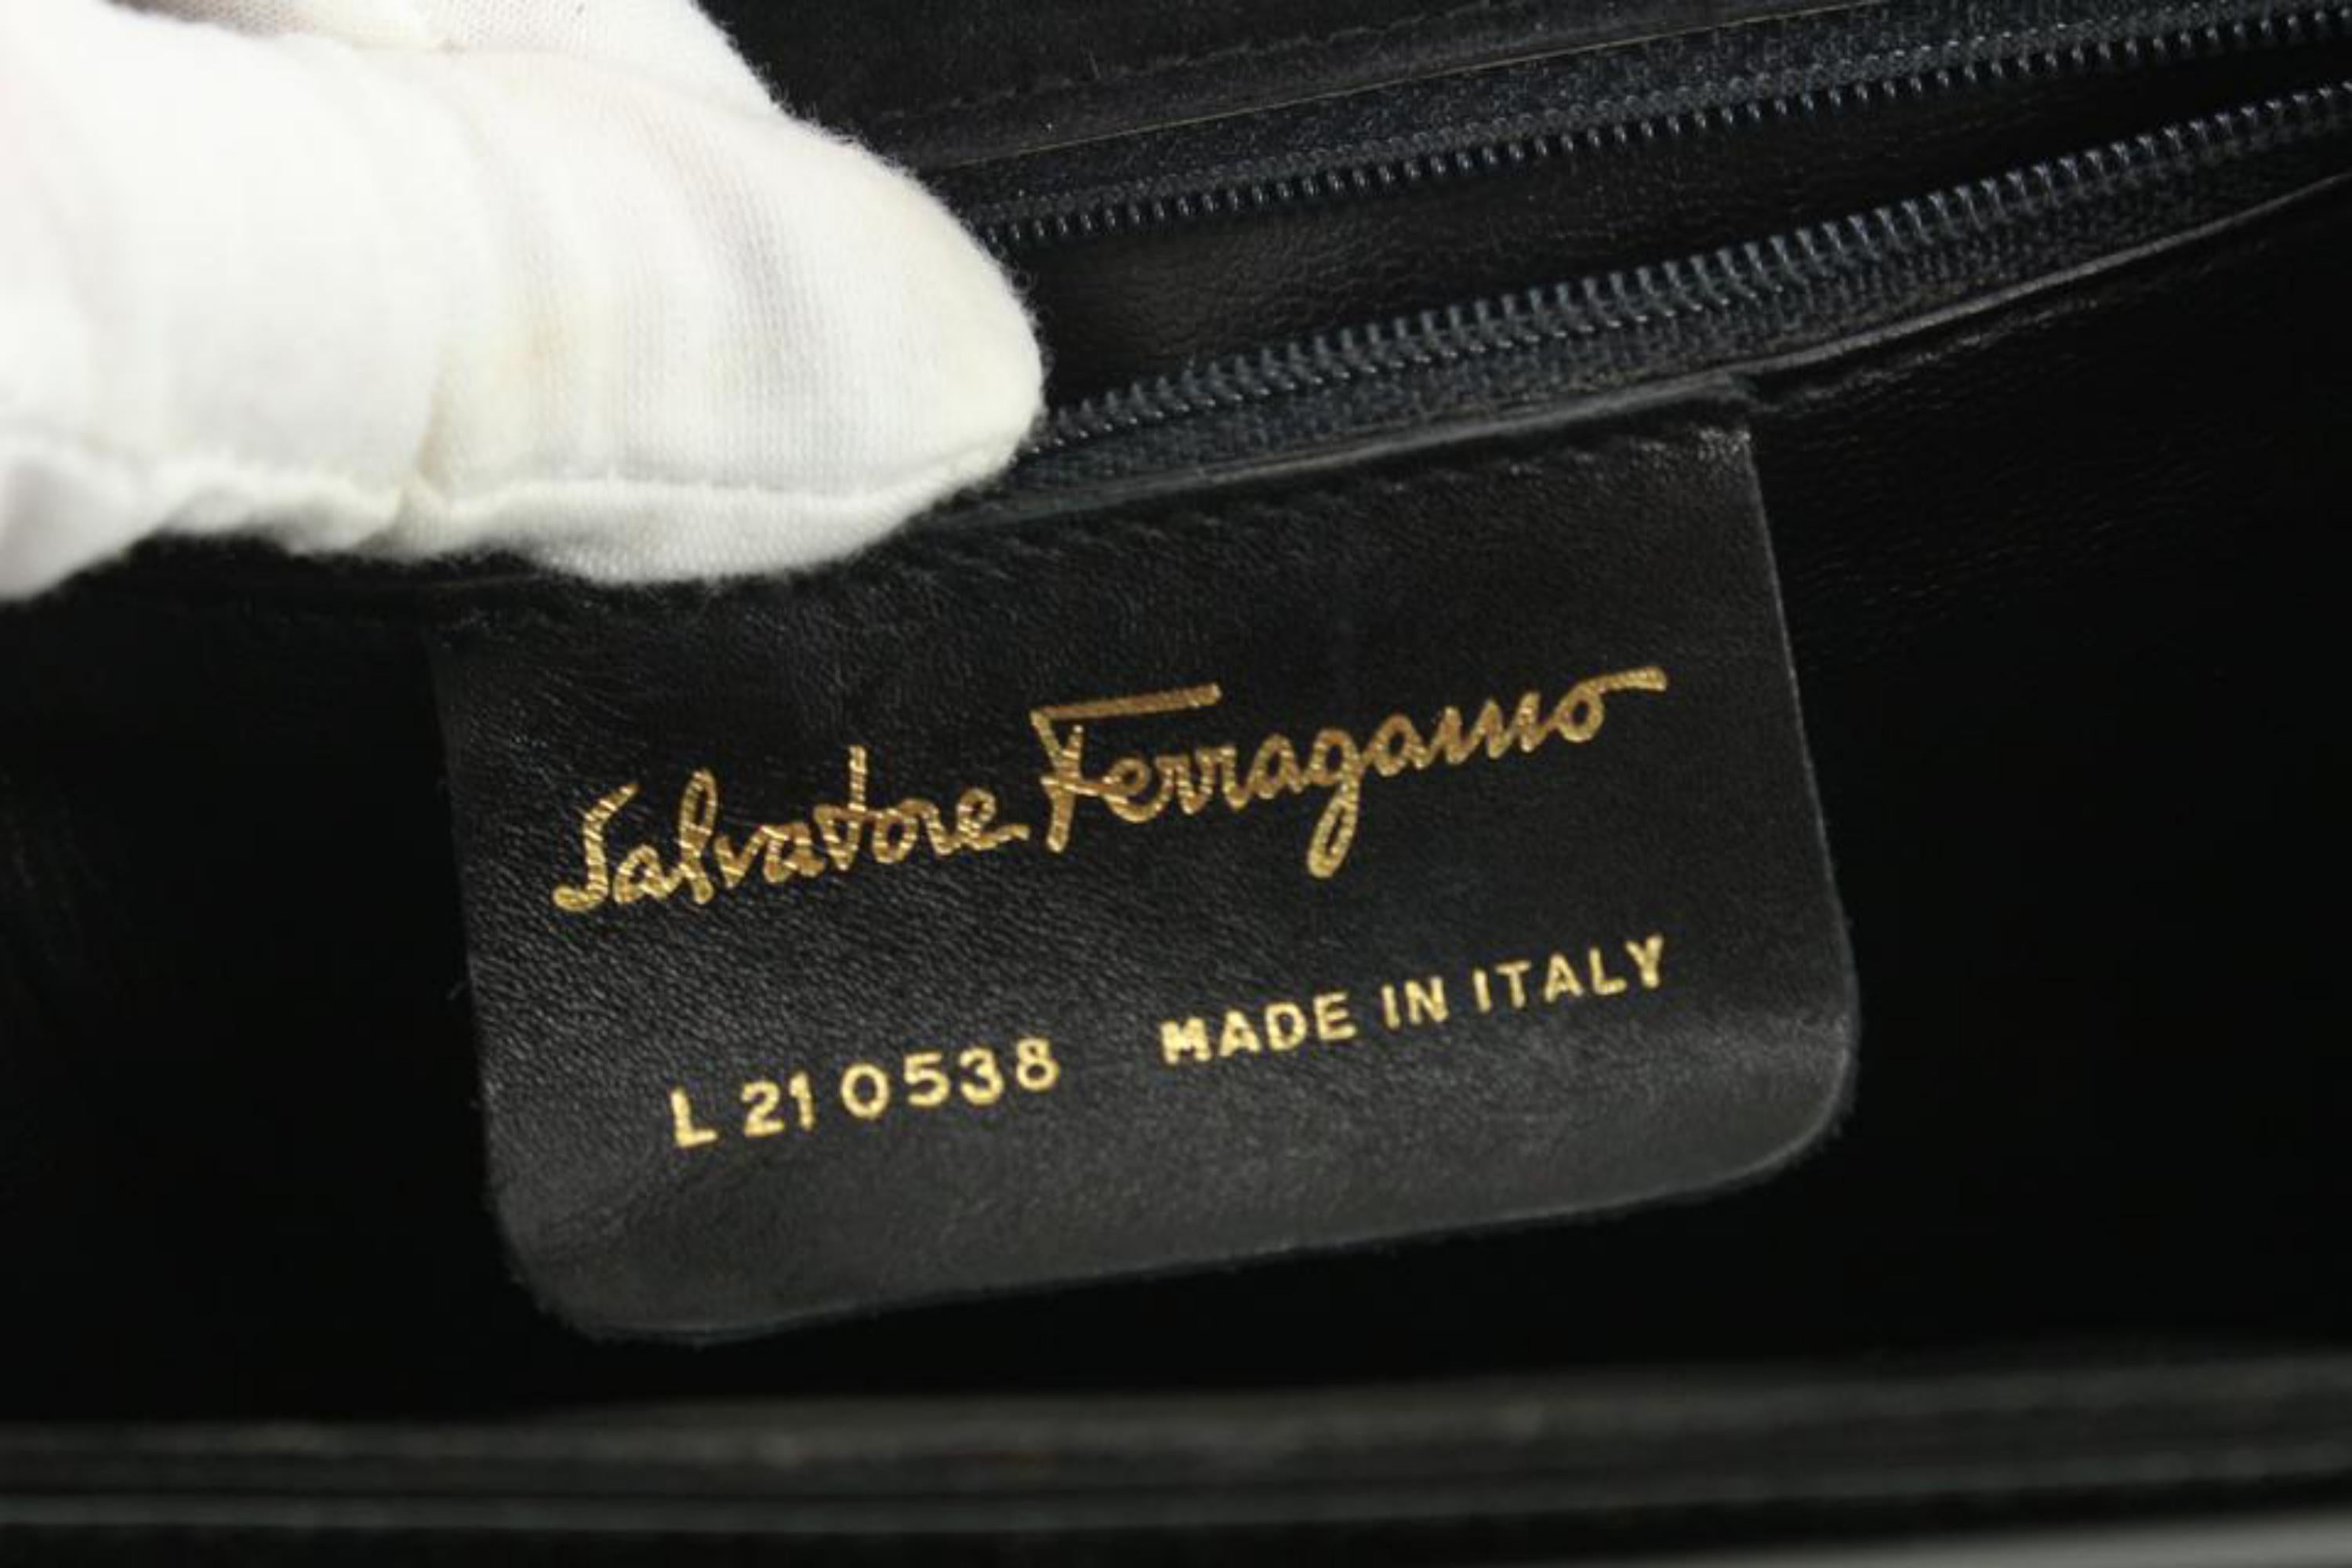 Salvatore Ferragamo Black Patent Leather Gold Gancini Logo Shoulder Flap Bag 3SF16
Date Code/Serial Number: L 21 0538
Made In: Italy
Measurements: Length: 9.5 